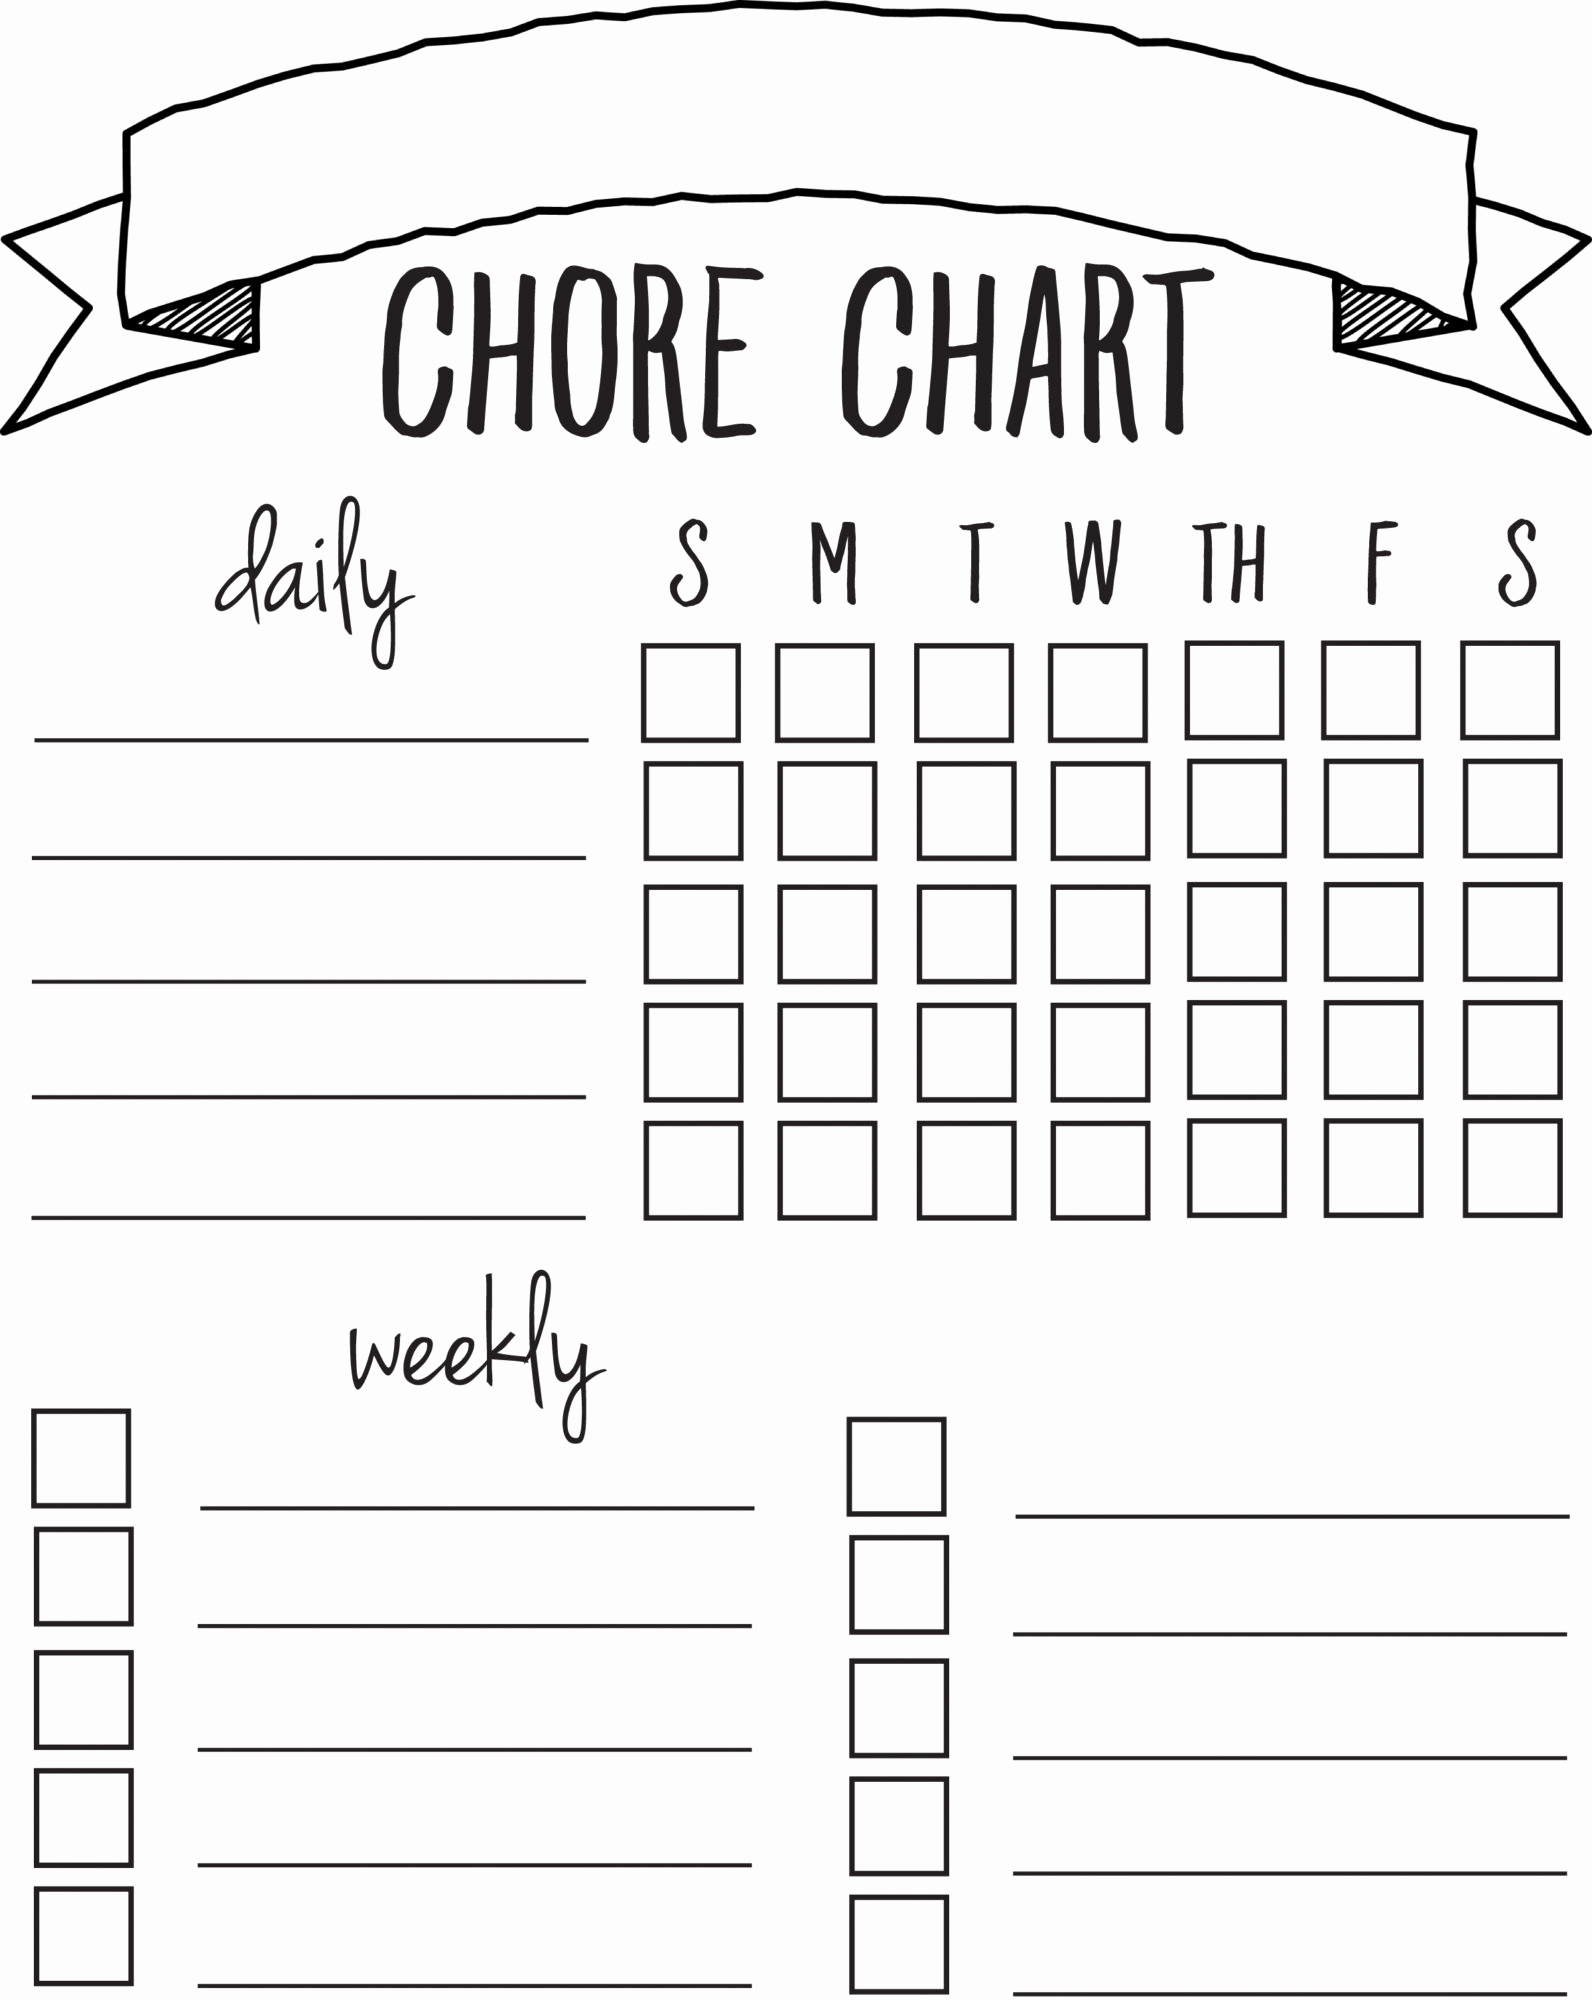 Free Editable Printable Chore Charts Elegant Diy Printable Chore Chart sincerely Sara D